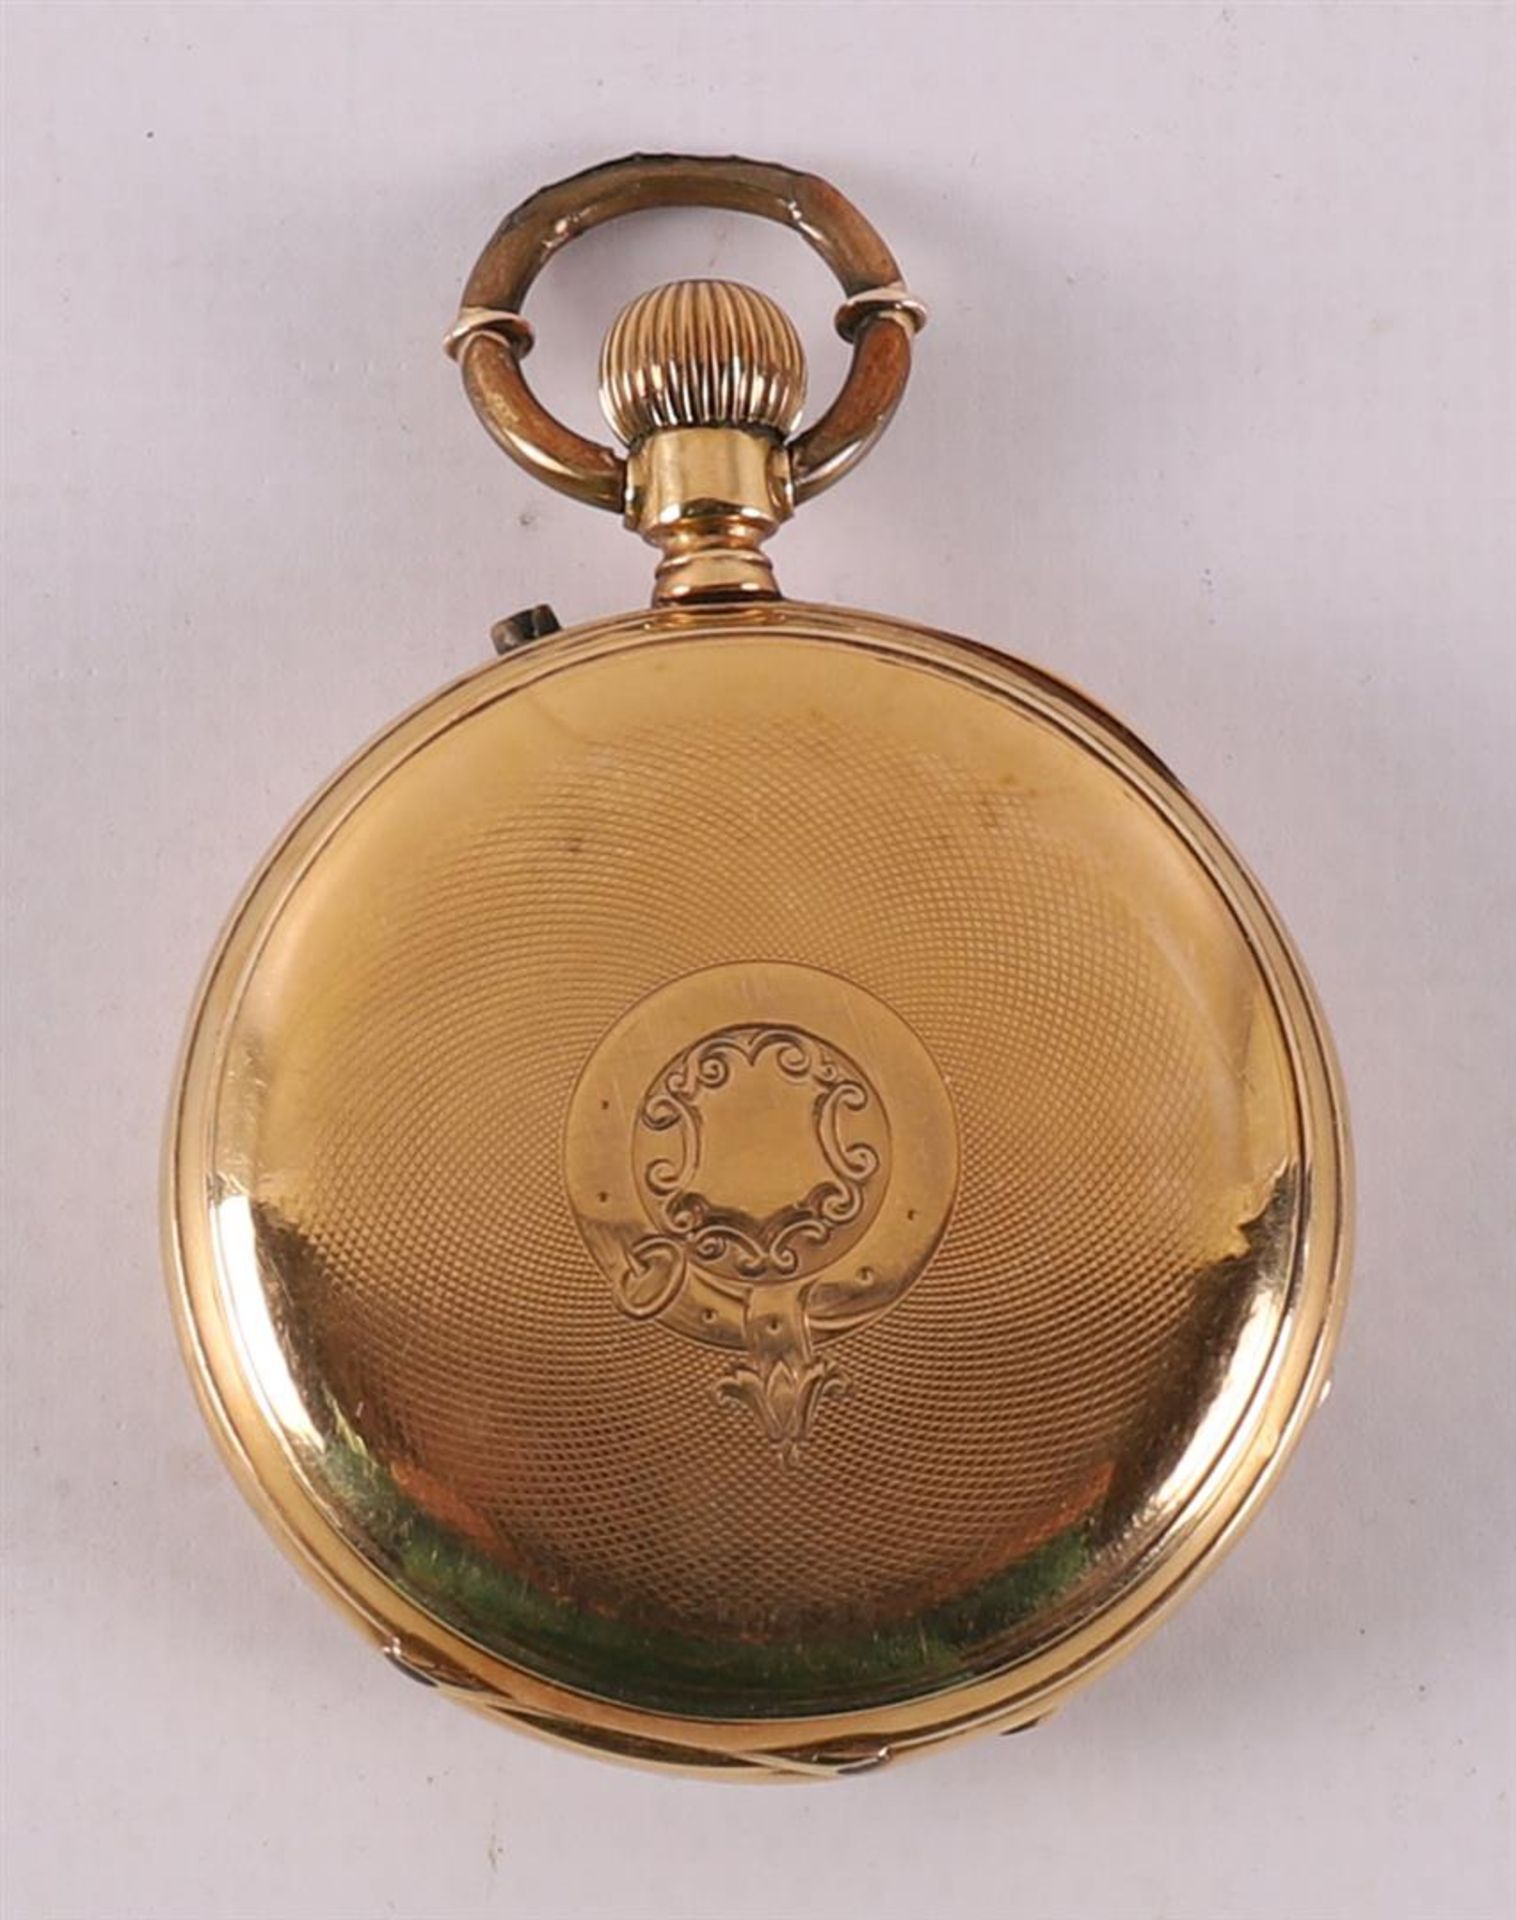 A Remontoir men's vest pocket watch in 18 kt gold case, late 19th century - Image 2 of 3